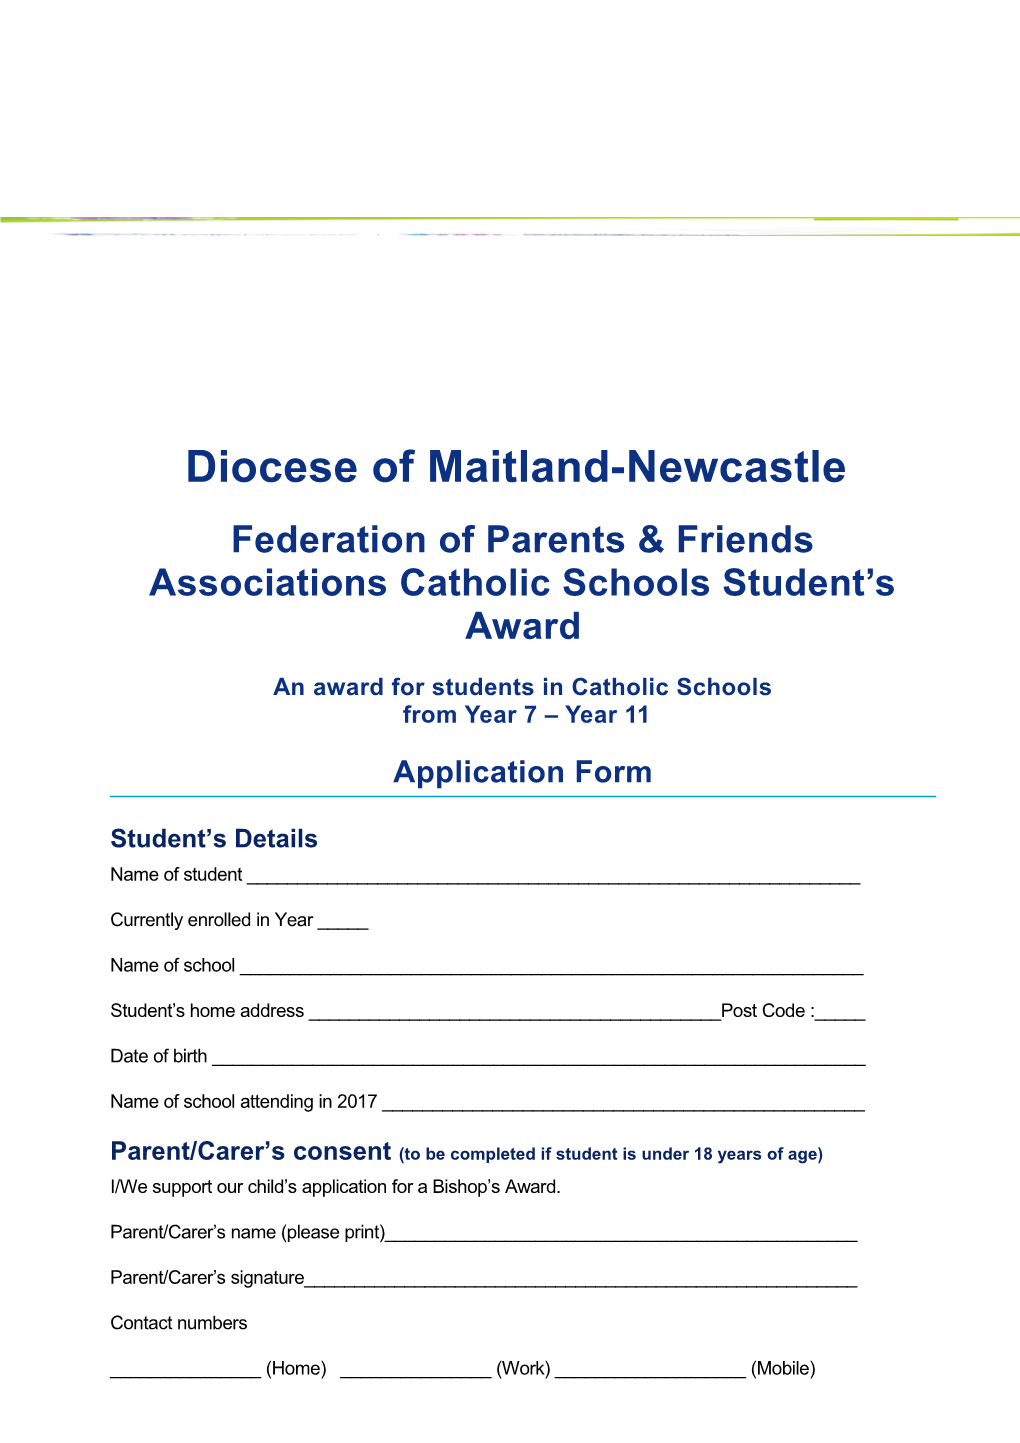 Federation of Parents & Friends Associations Catholic Schools Student S Award